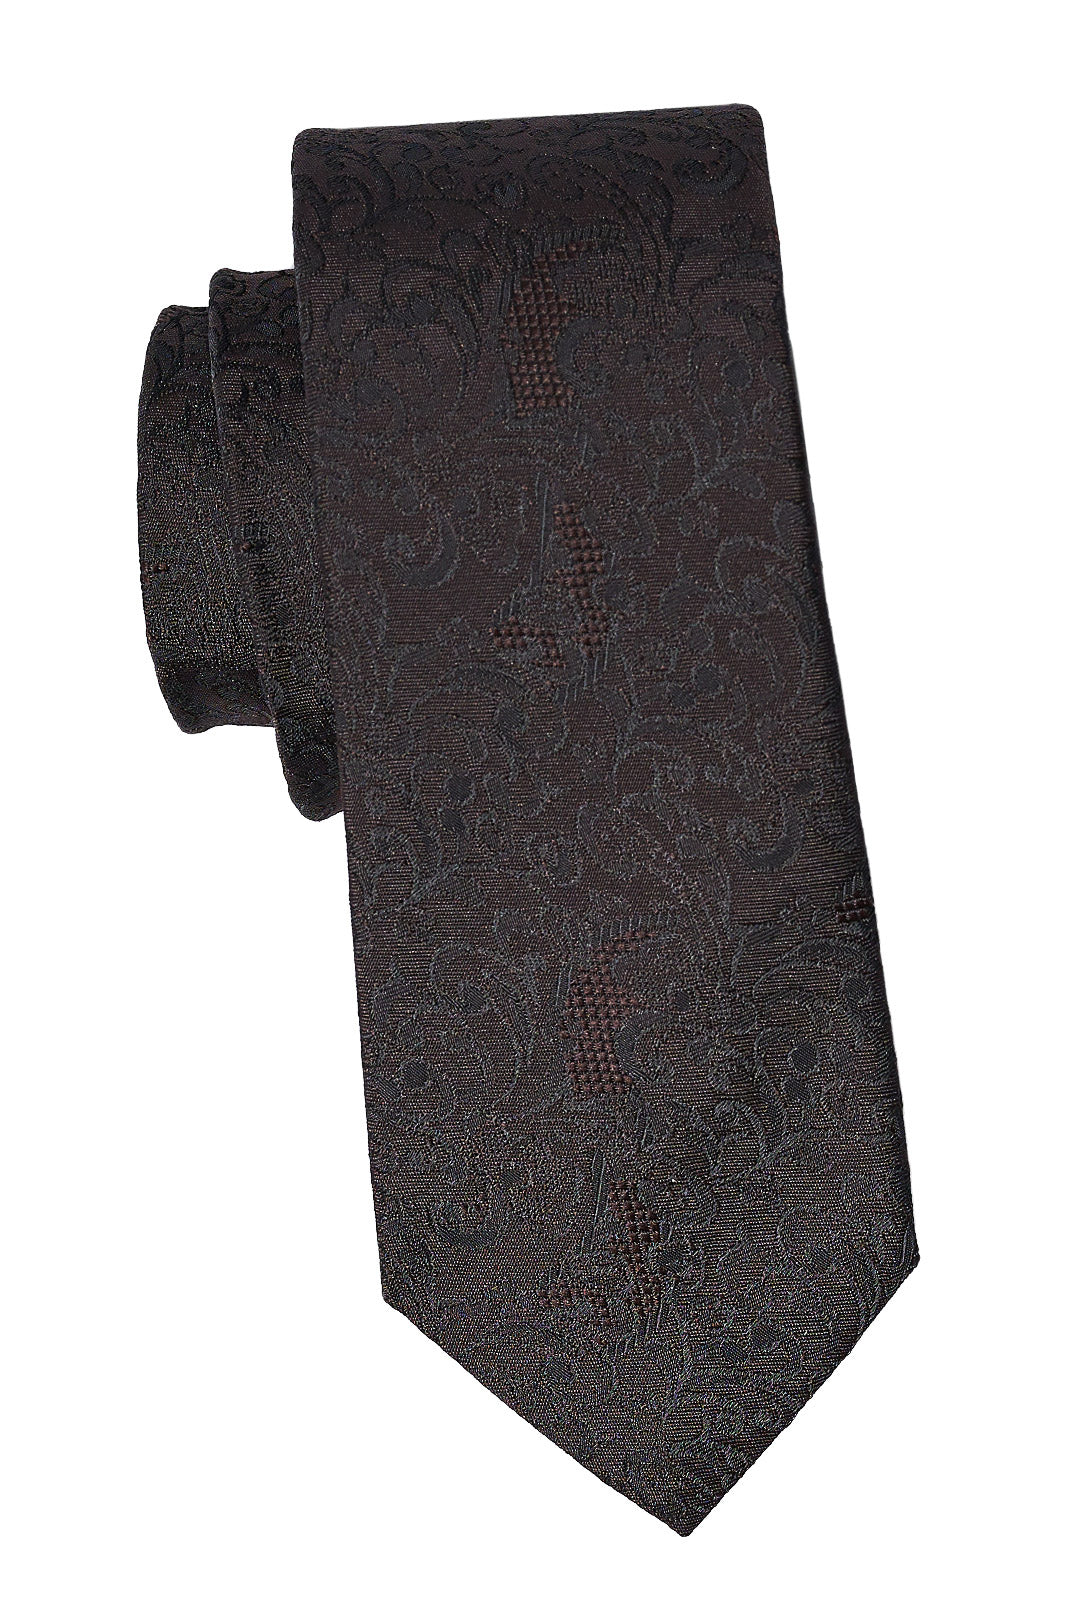 Embroidered Brown Flower Tie